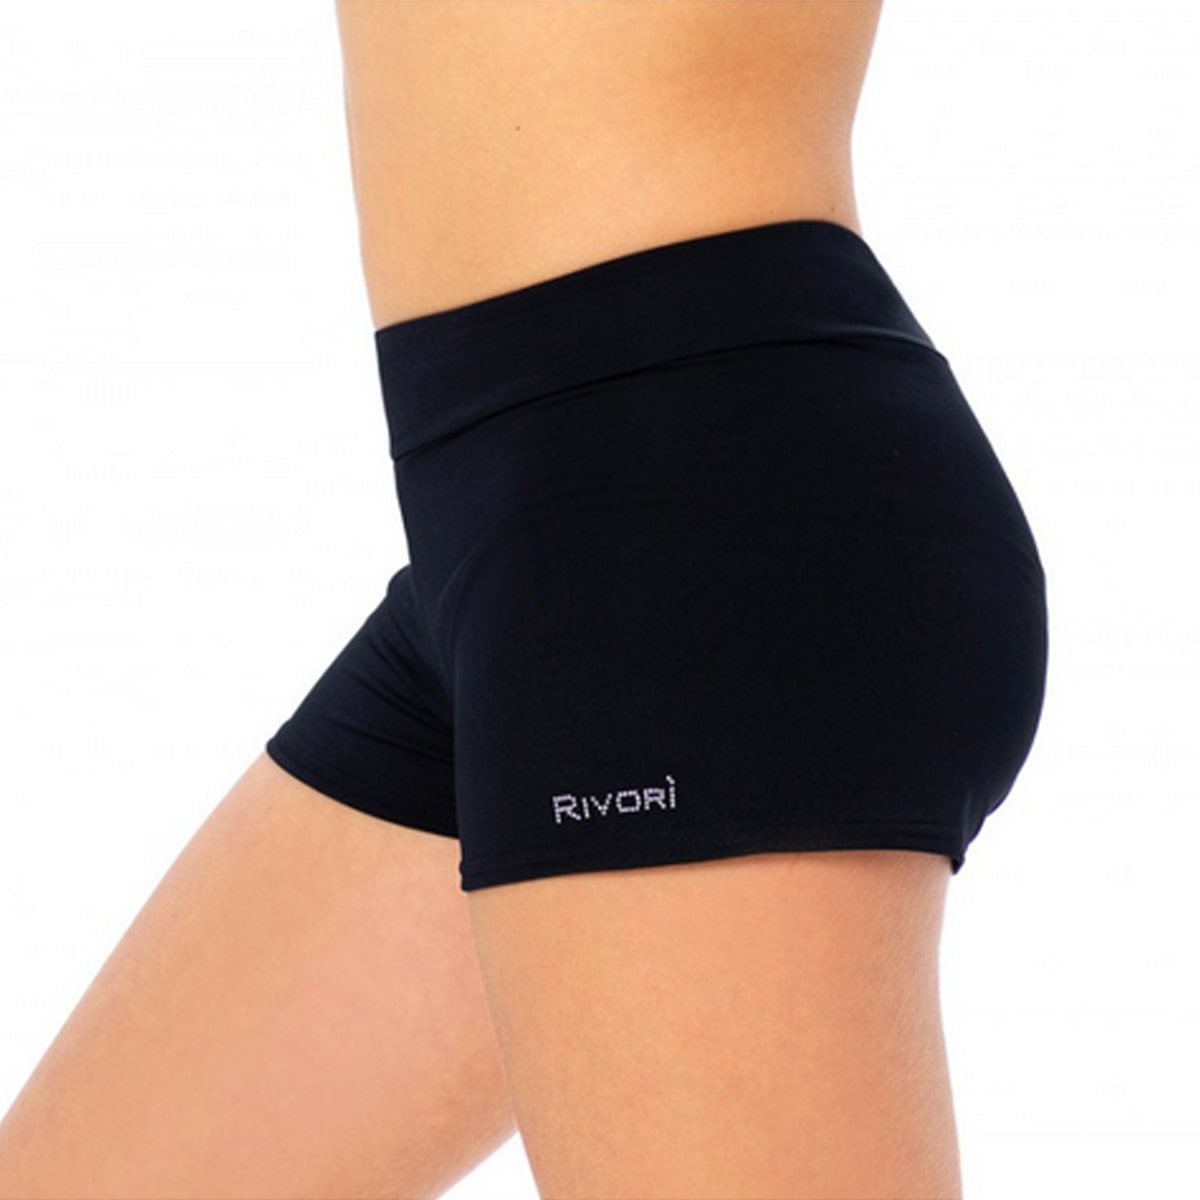 RIVORI - Rivori Thick Waist Short Pants